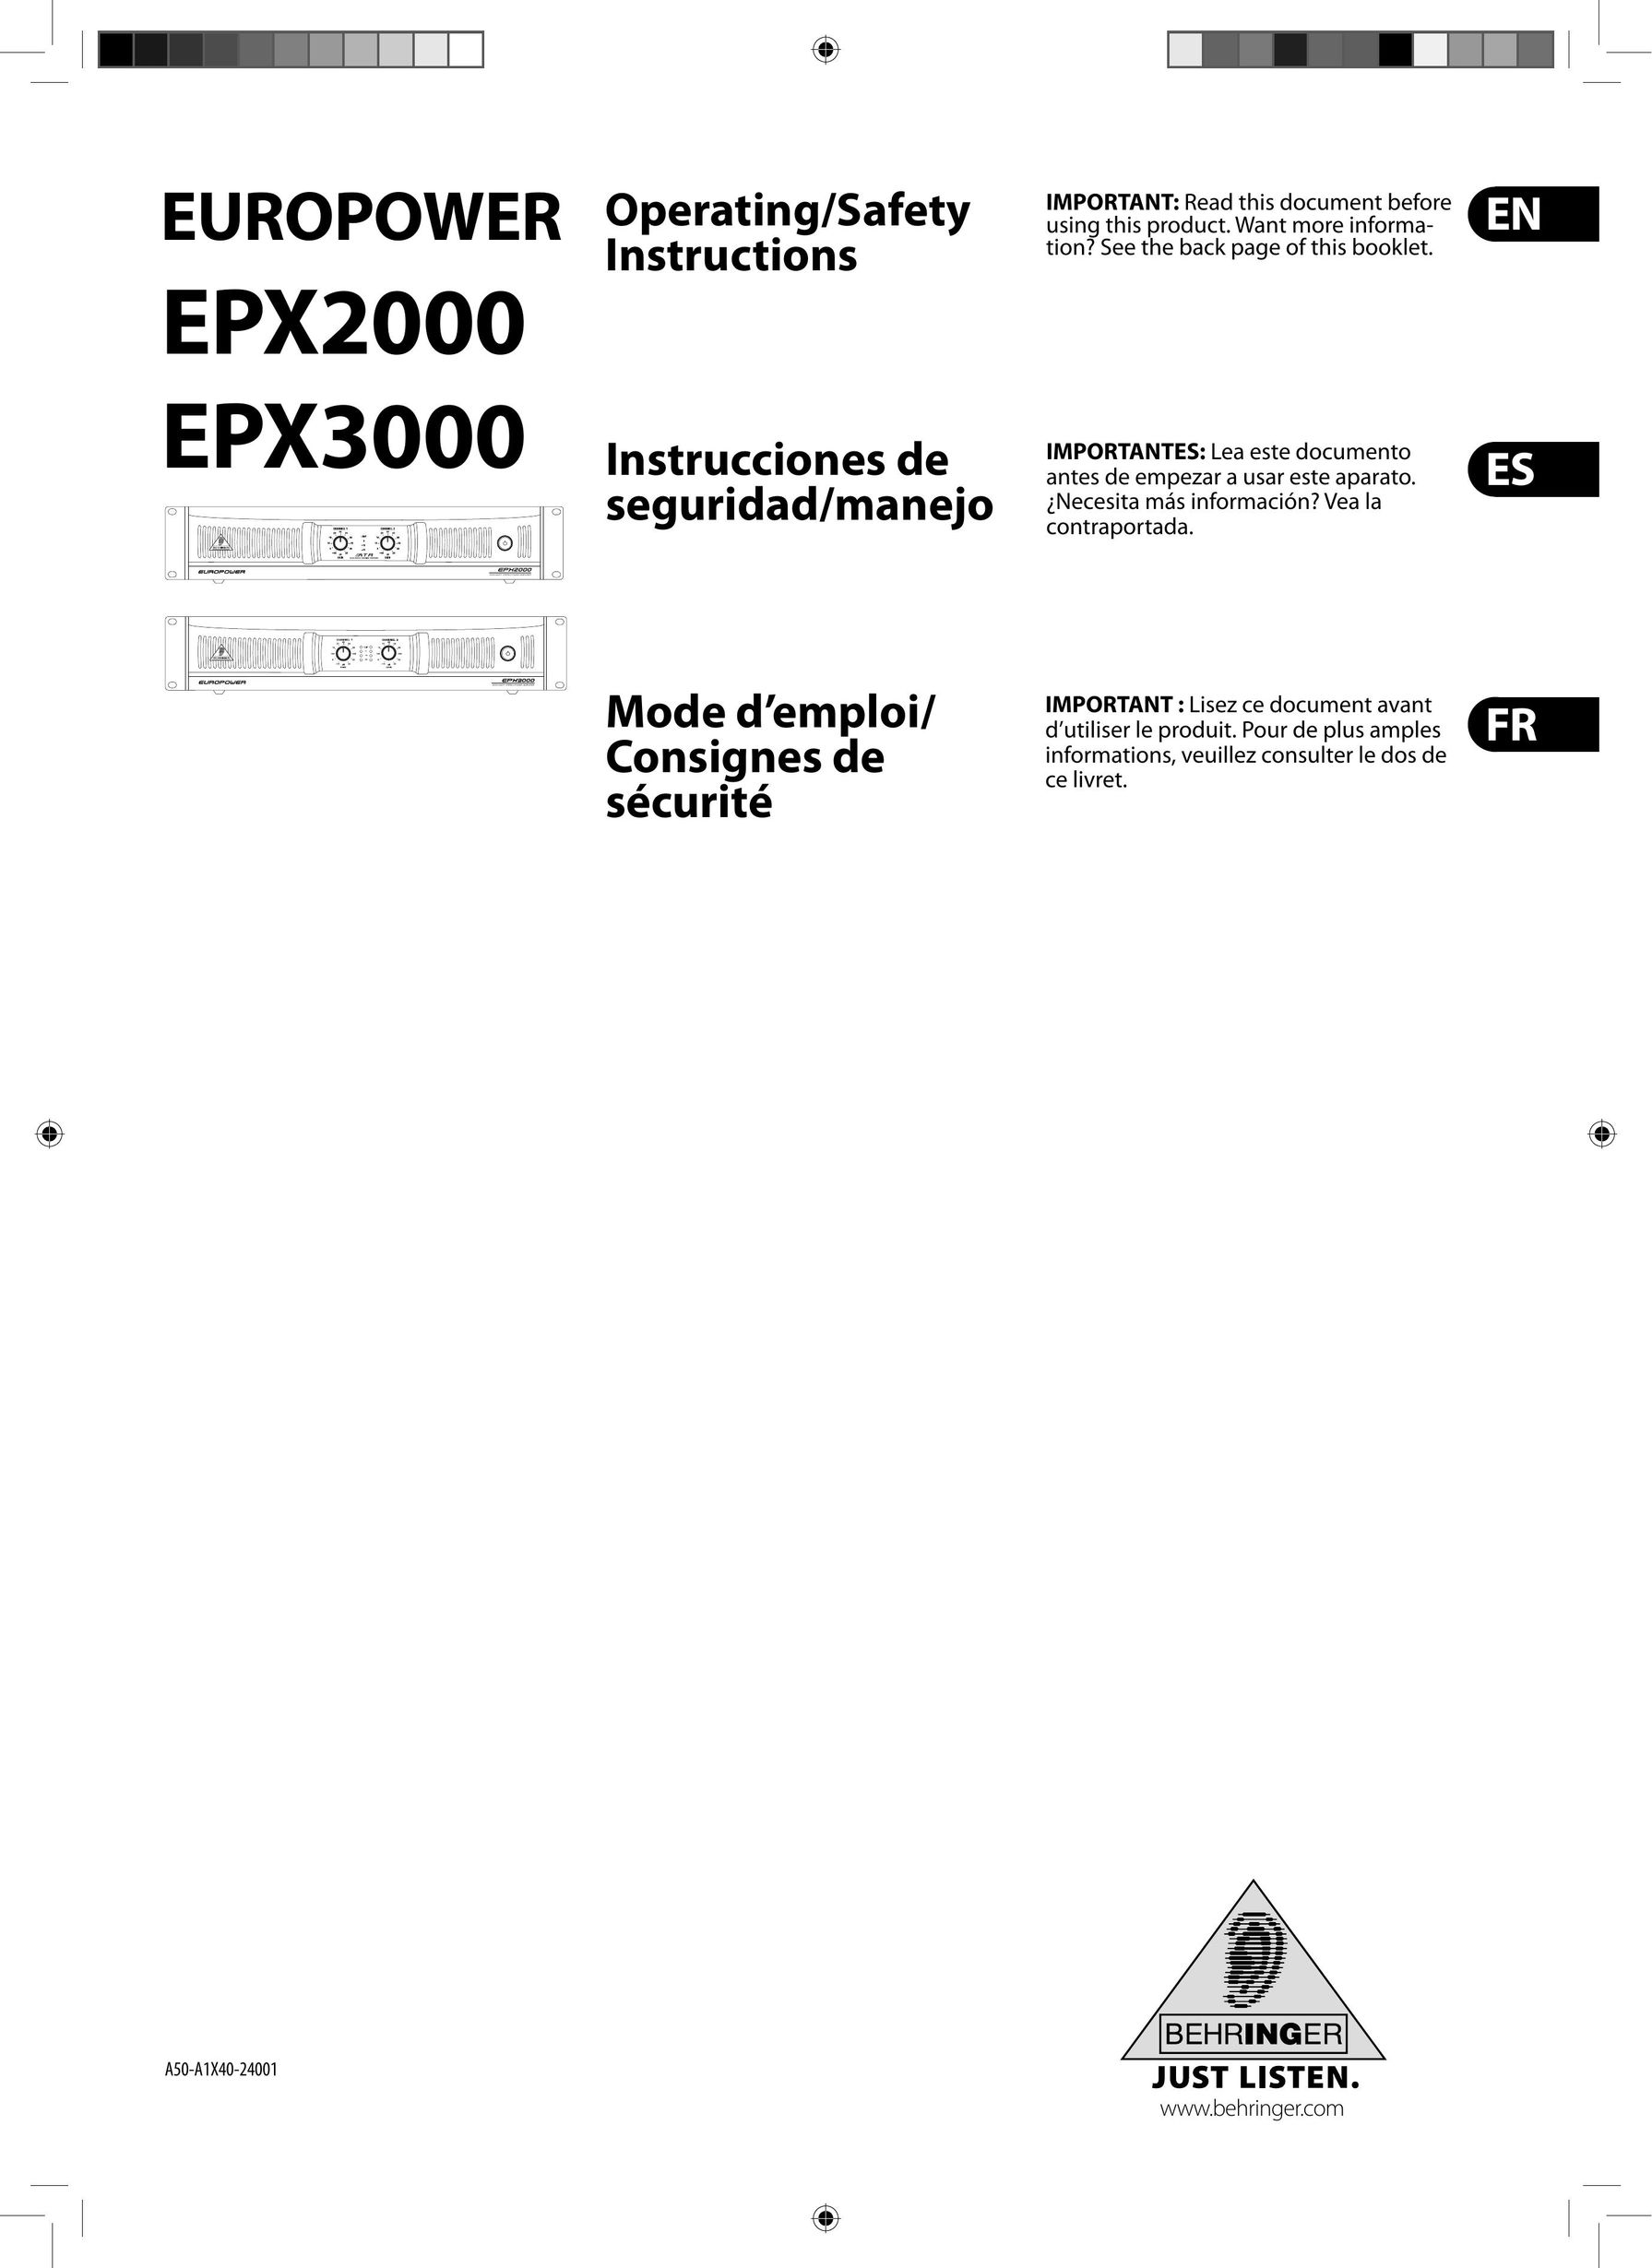 Behringer EPX3000 Stereo Amplifier User Manual